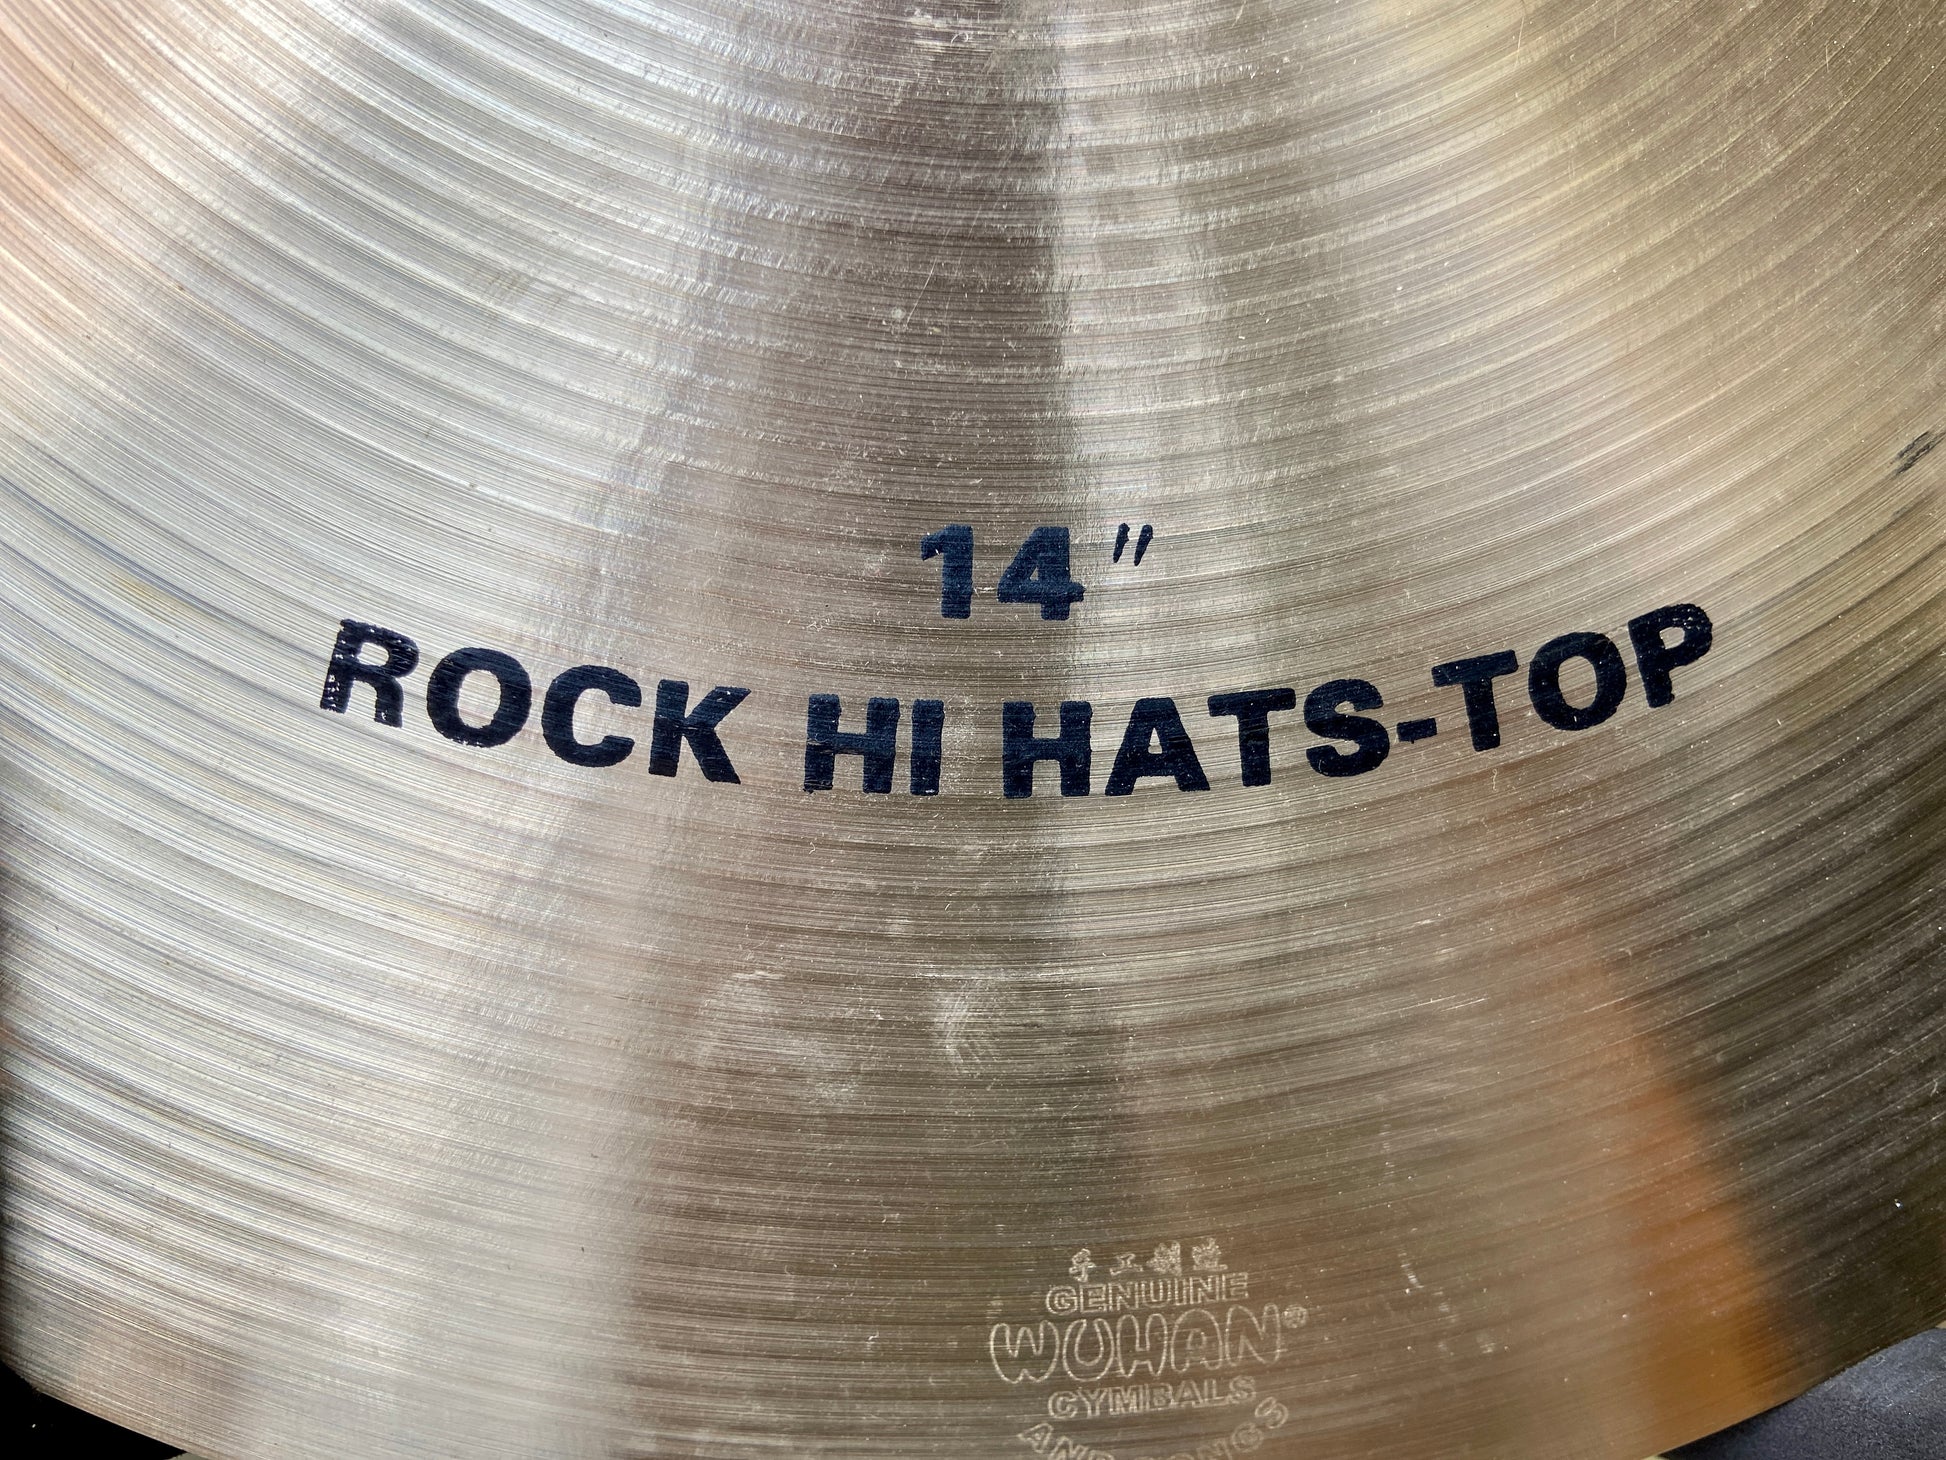 Wuhan 14" Rock Hi-Hat Cymbals